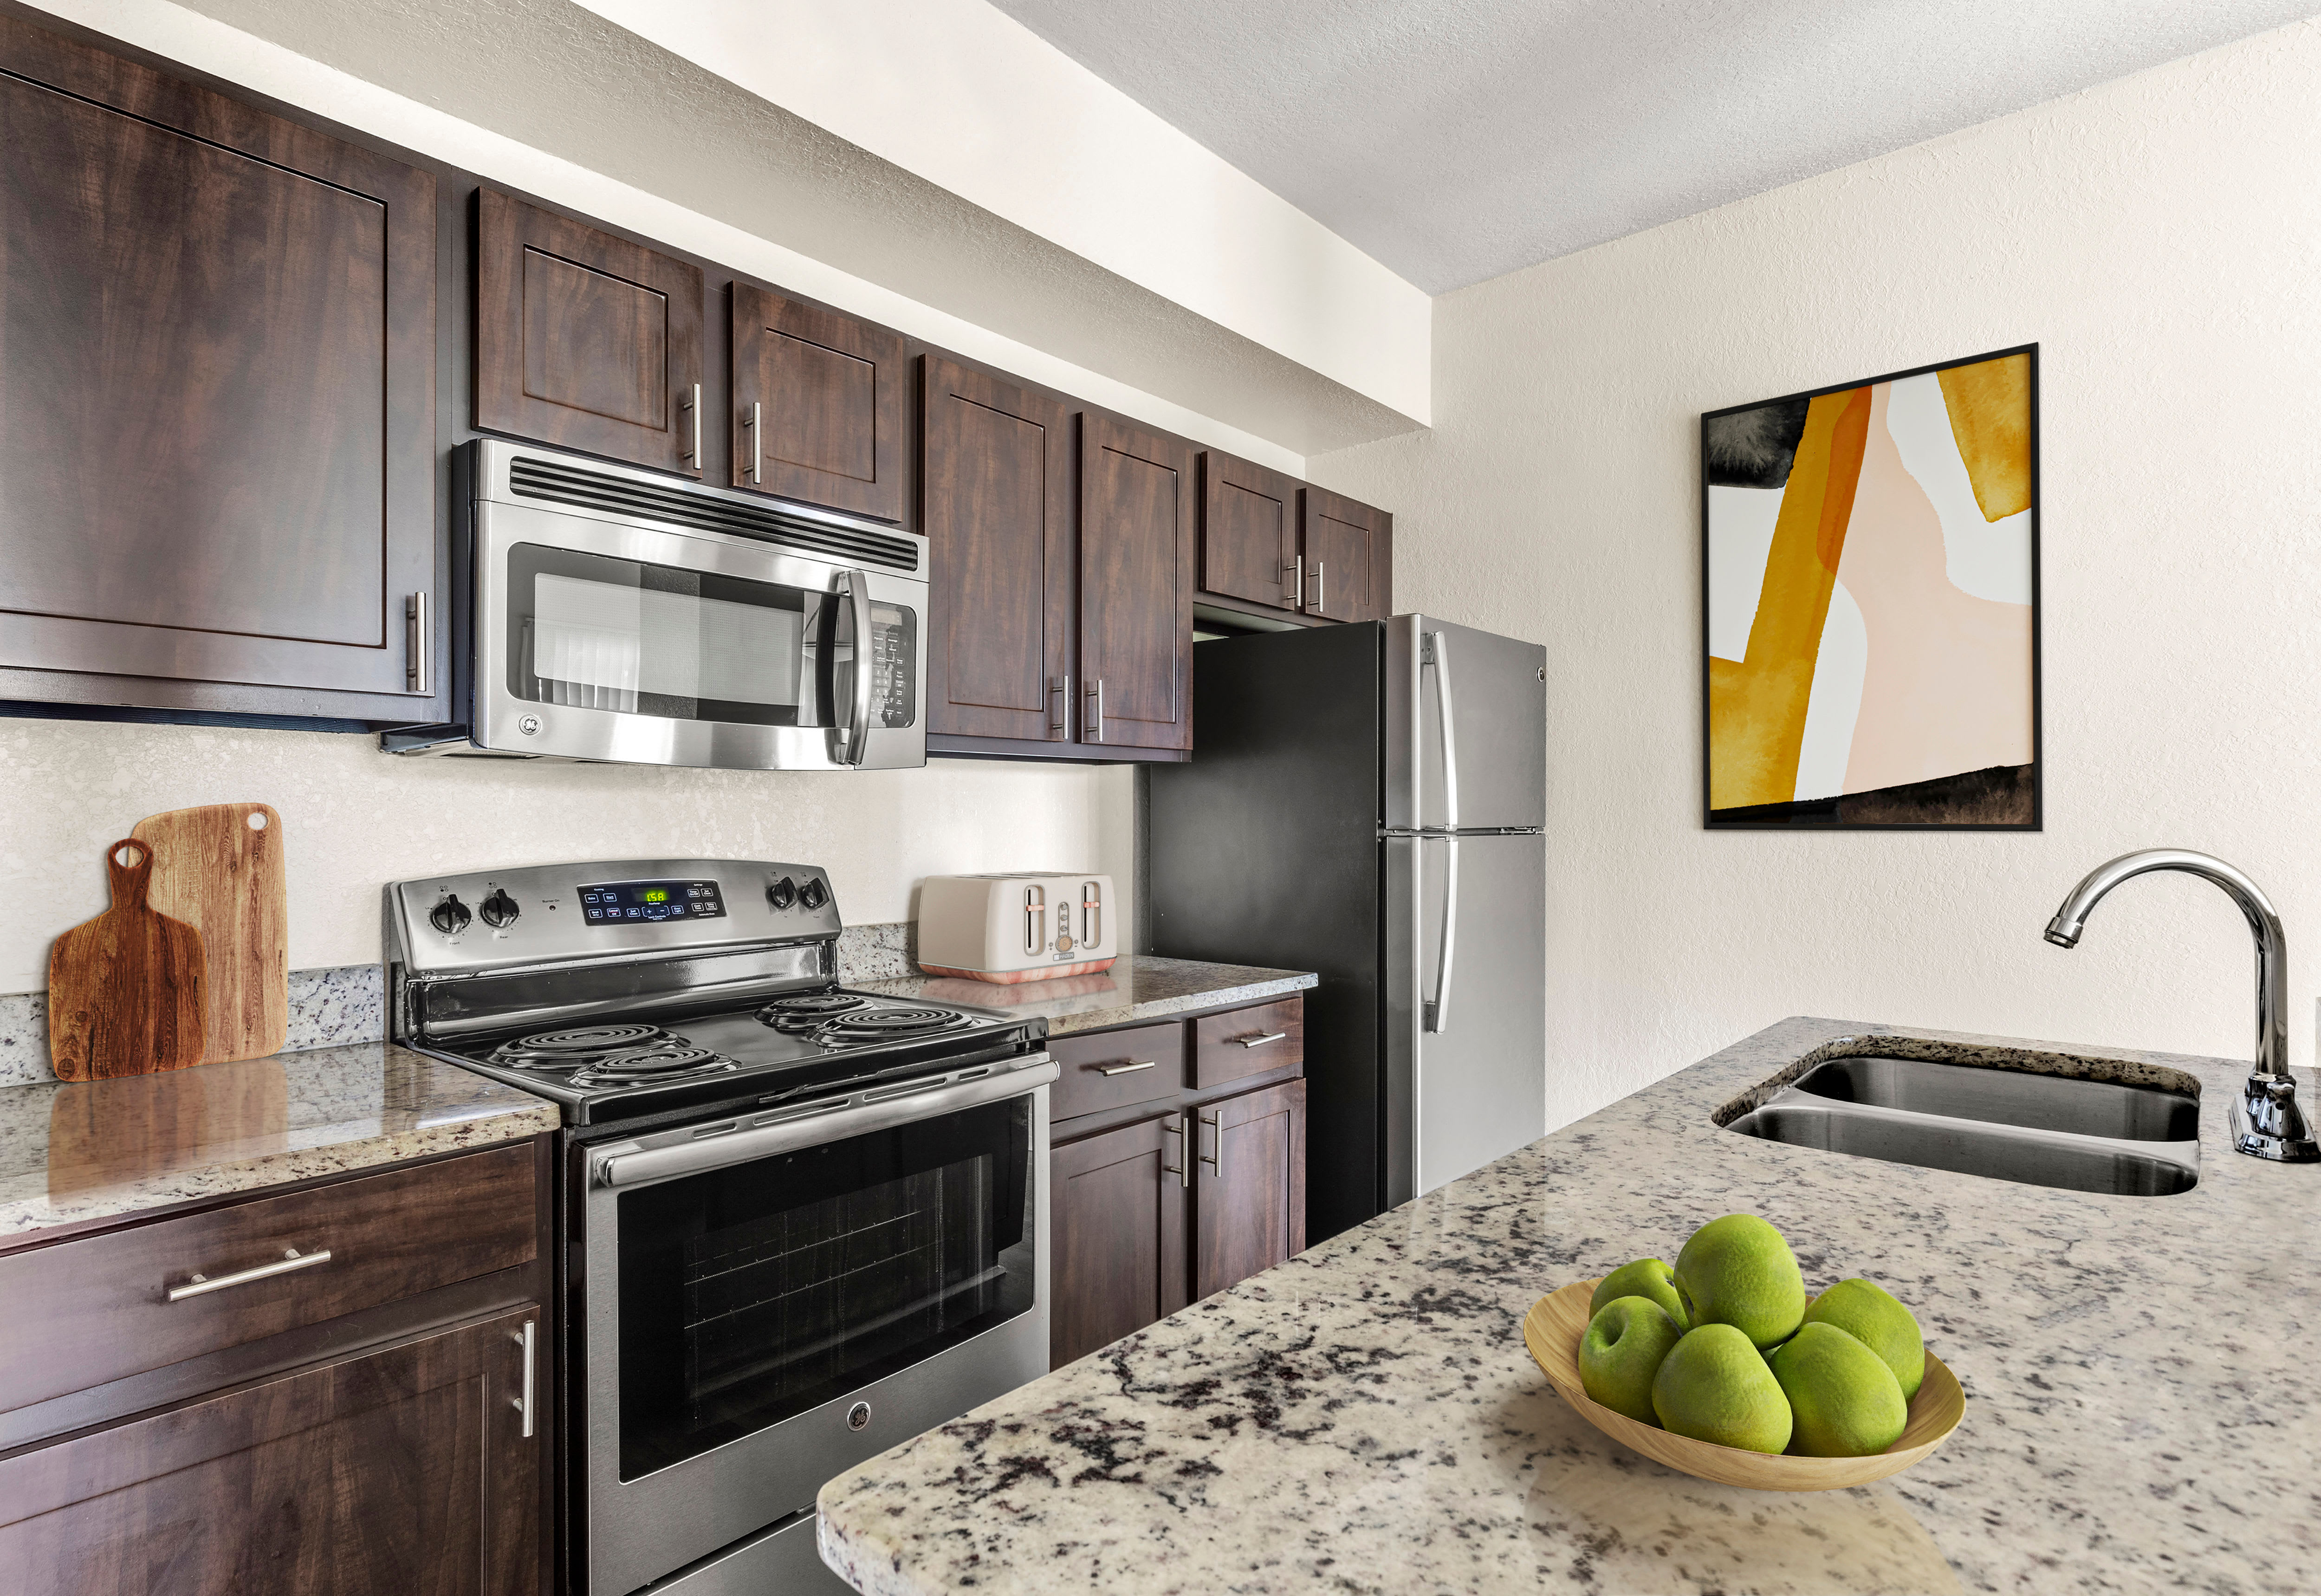 Model kitchen at Harbortown Apartments in Orlando, Florida